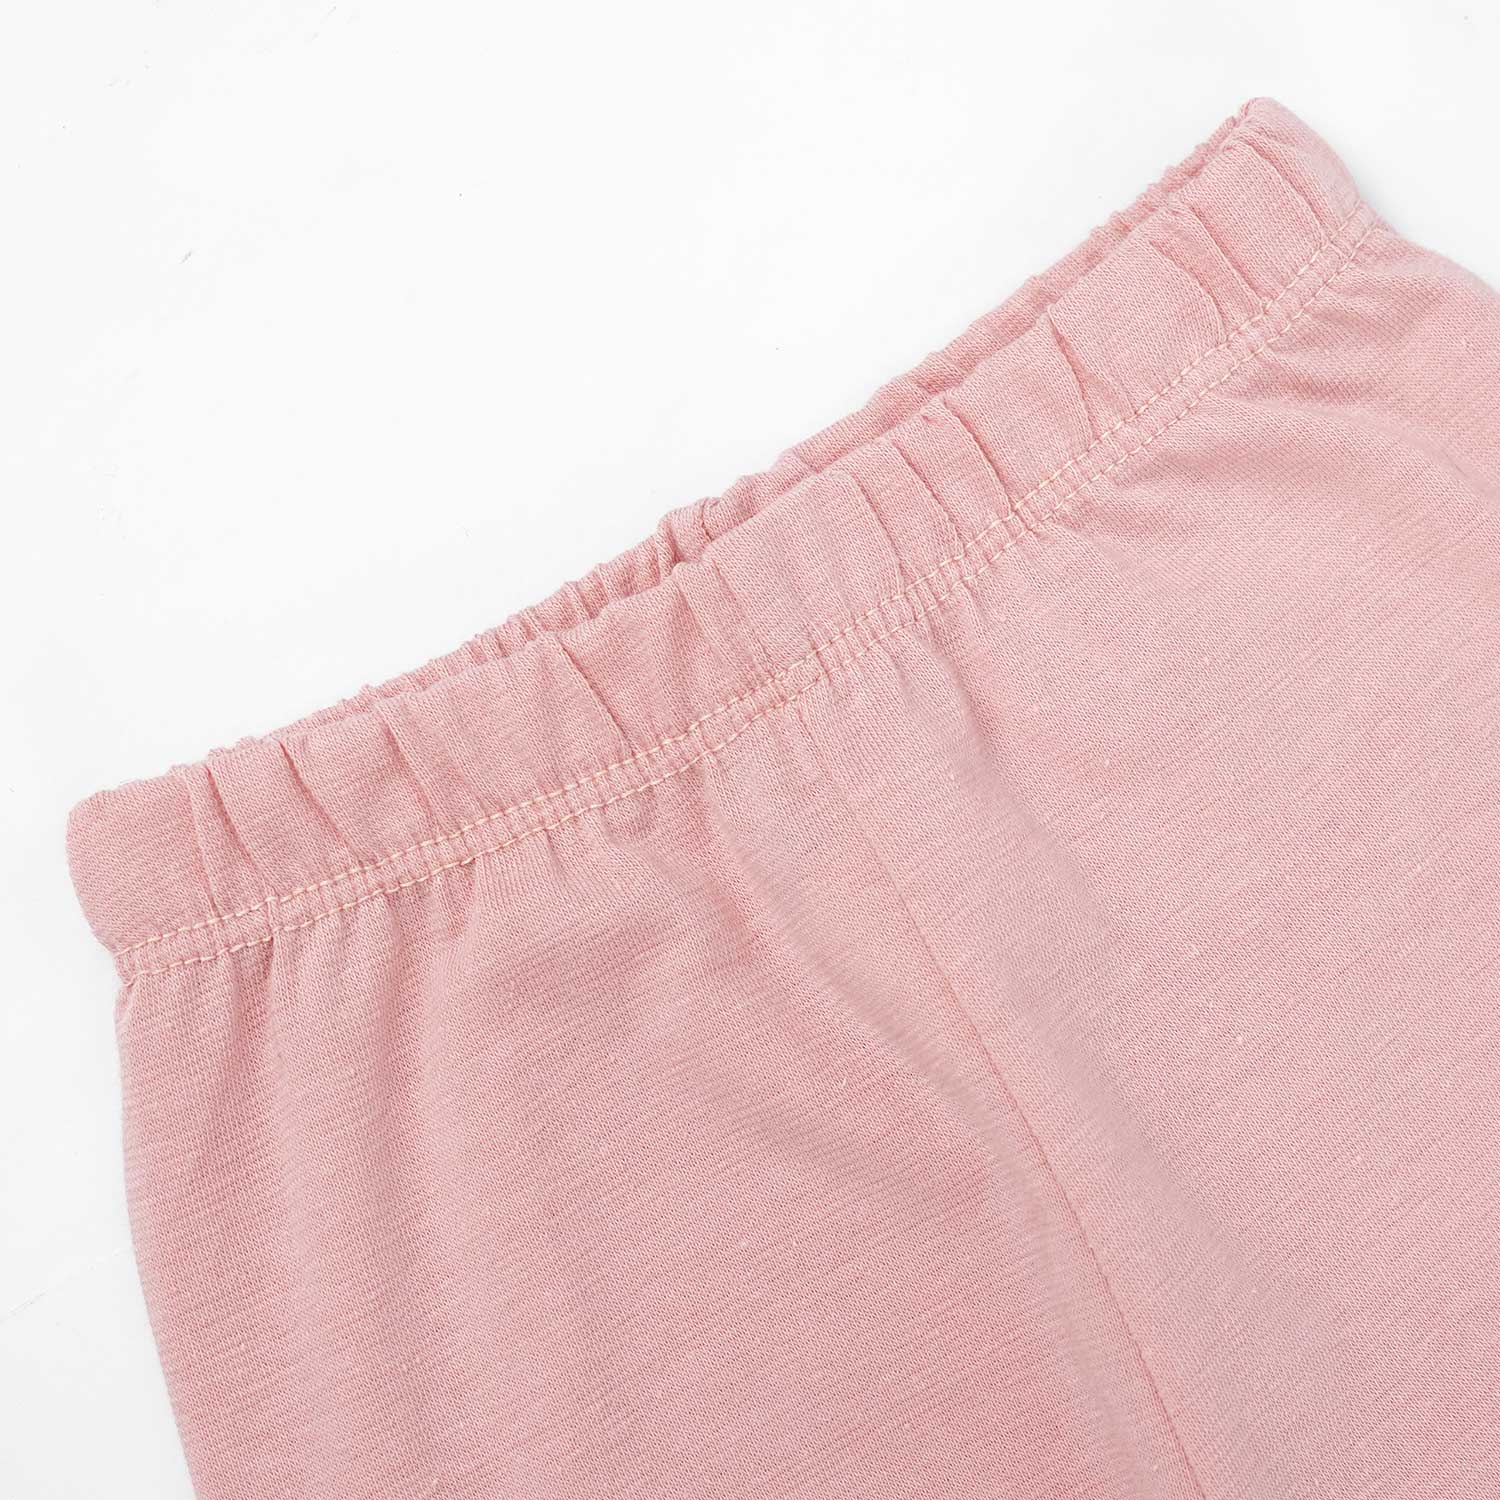 Girls Soft Cotton Printed Light Pink Leggings